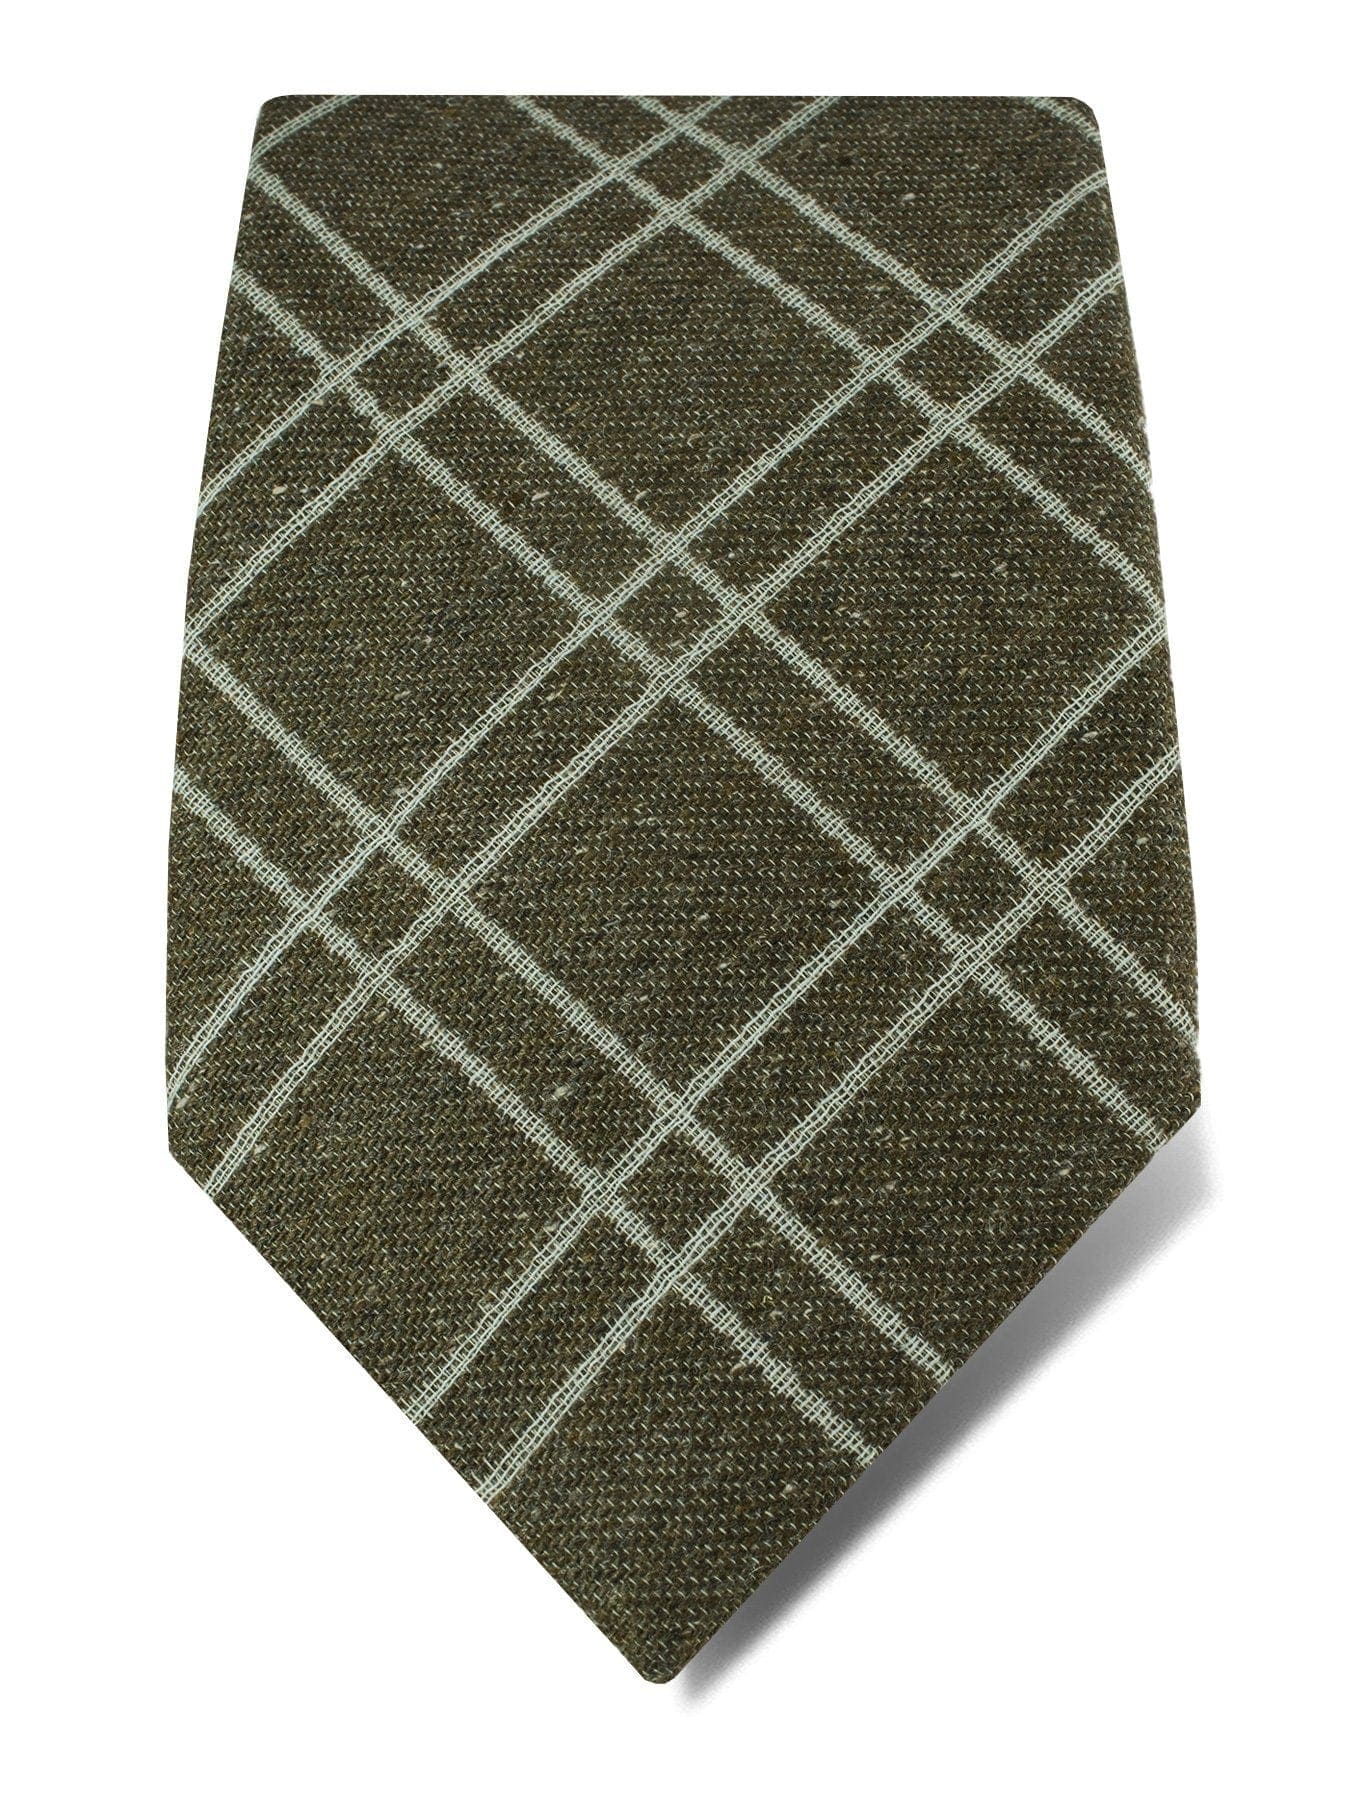 Brown Woven Cotton & Silk Tie with White Overcheck